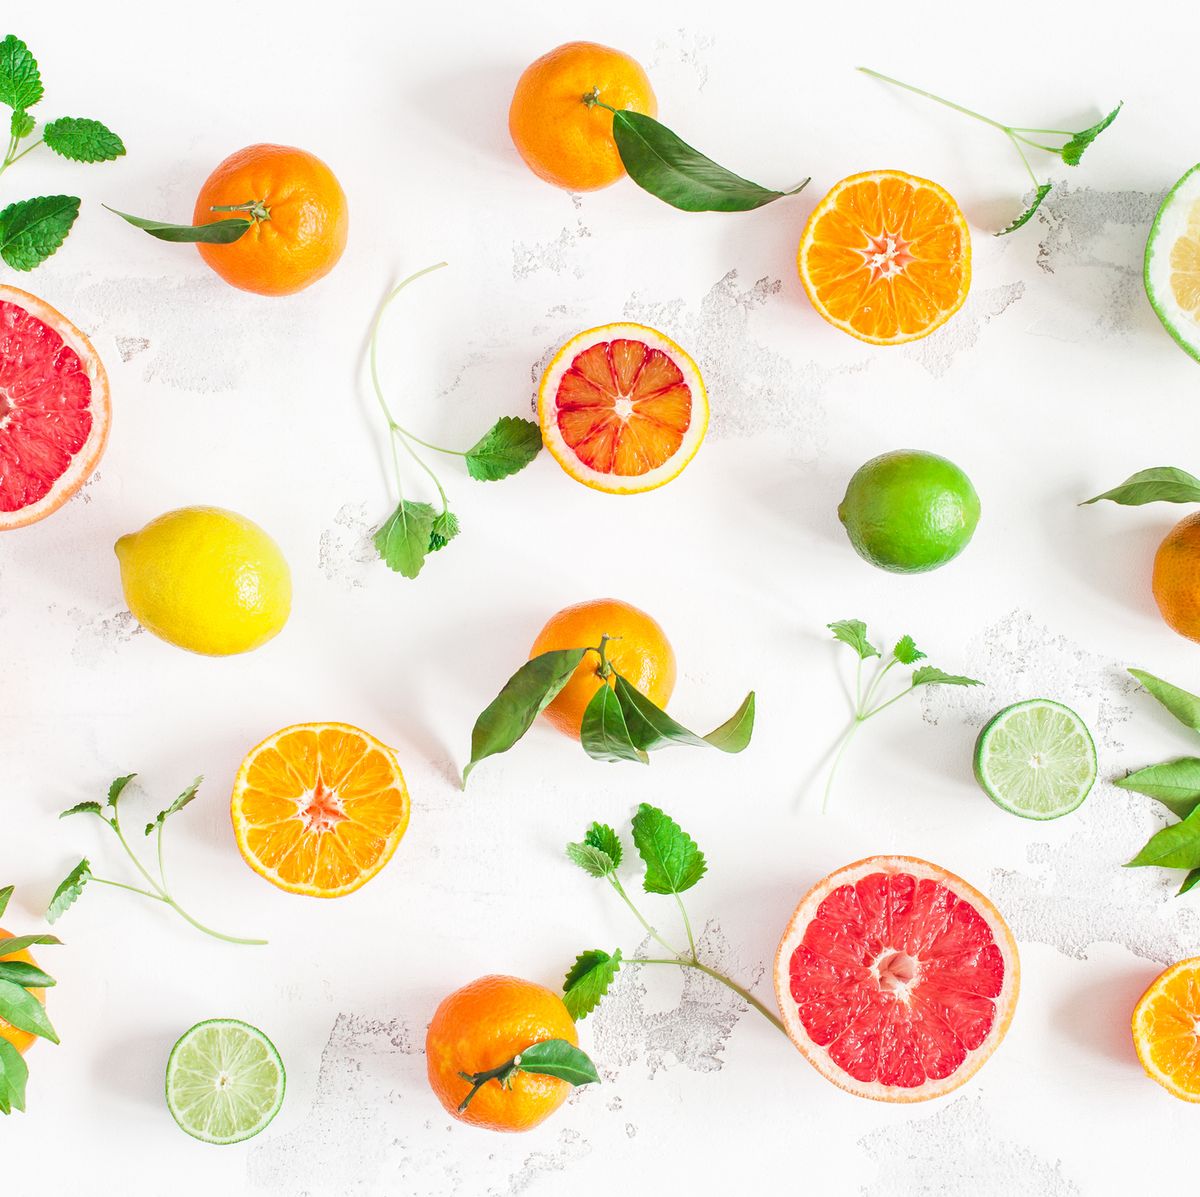 10 Best Benefits of Citrus Fruits - Antioxidants, Vitamins, and ...